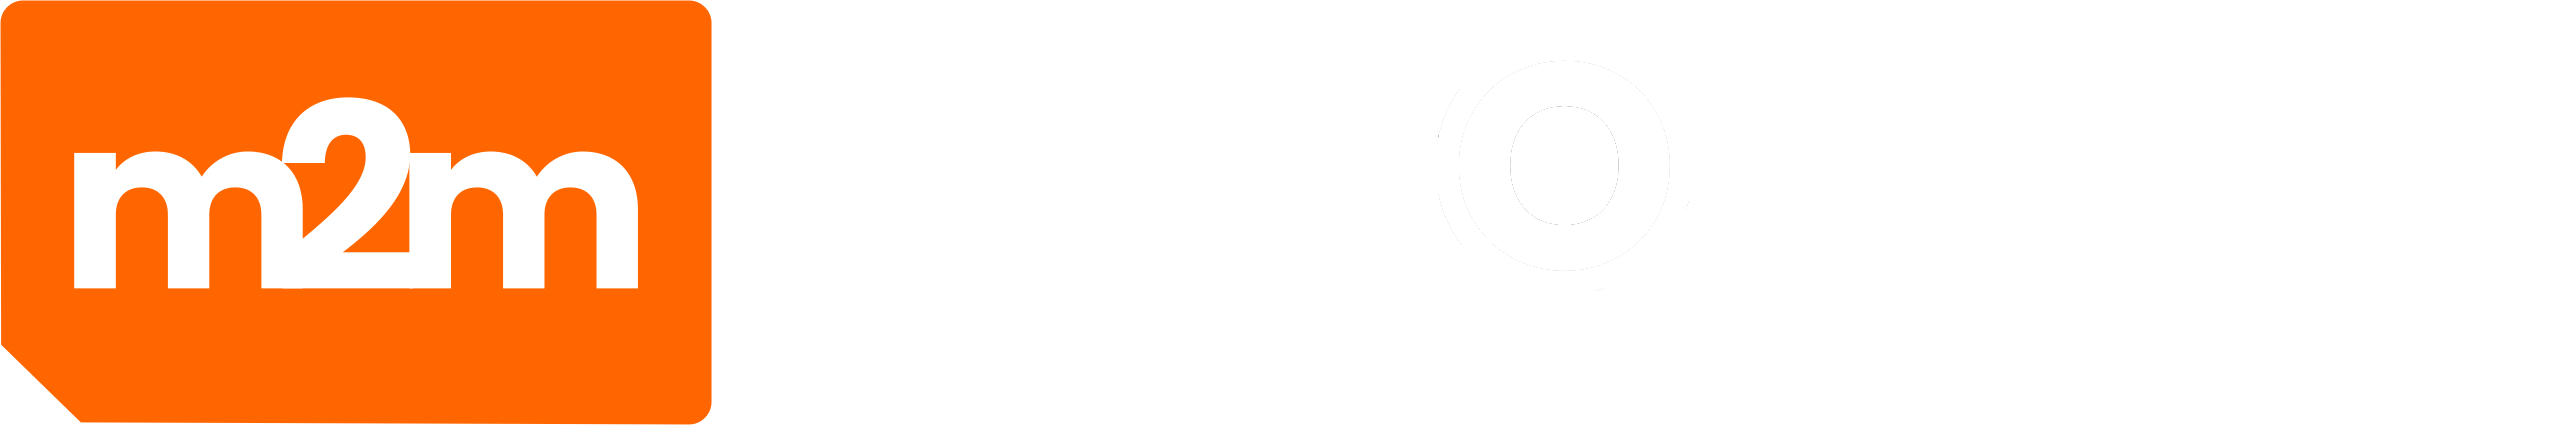 M2M IoT Connect Logo